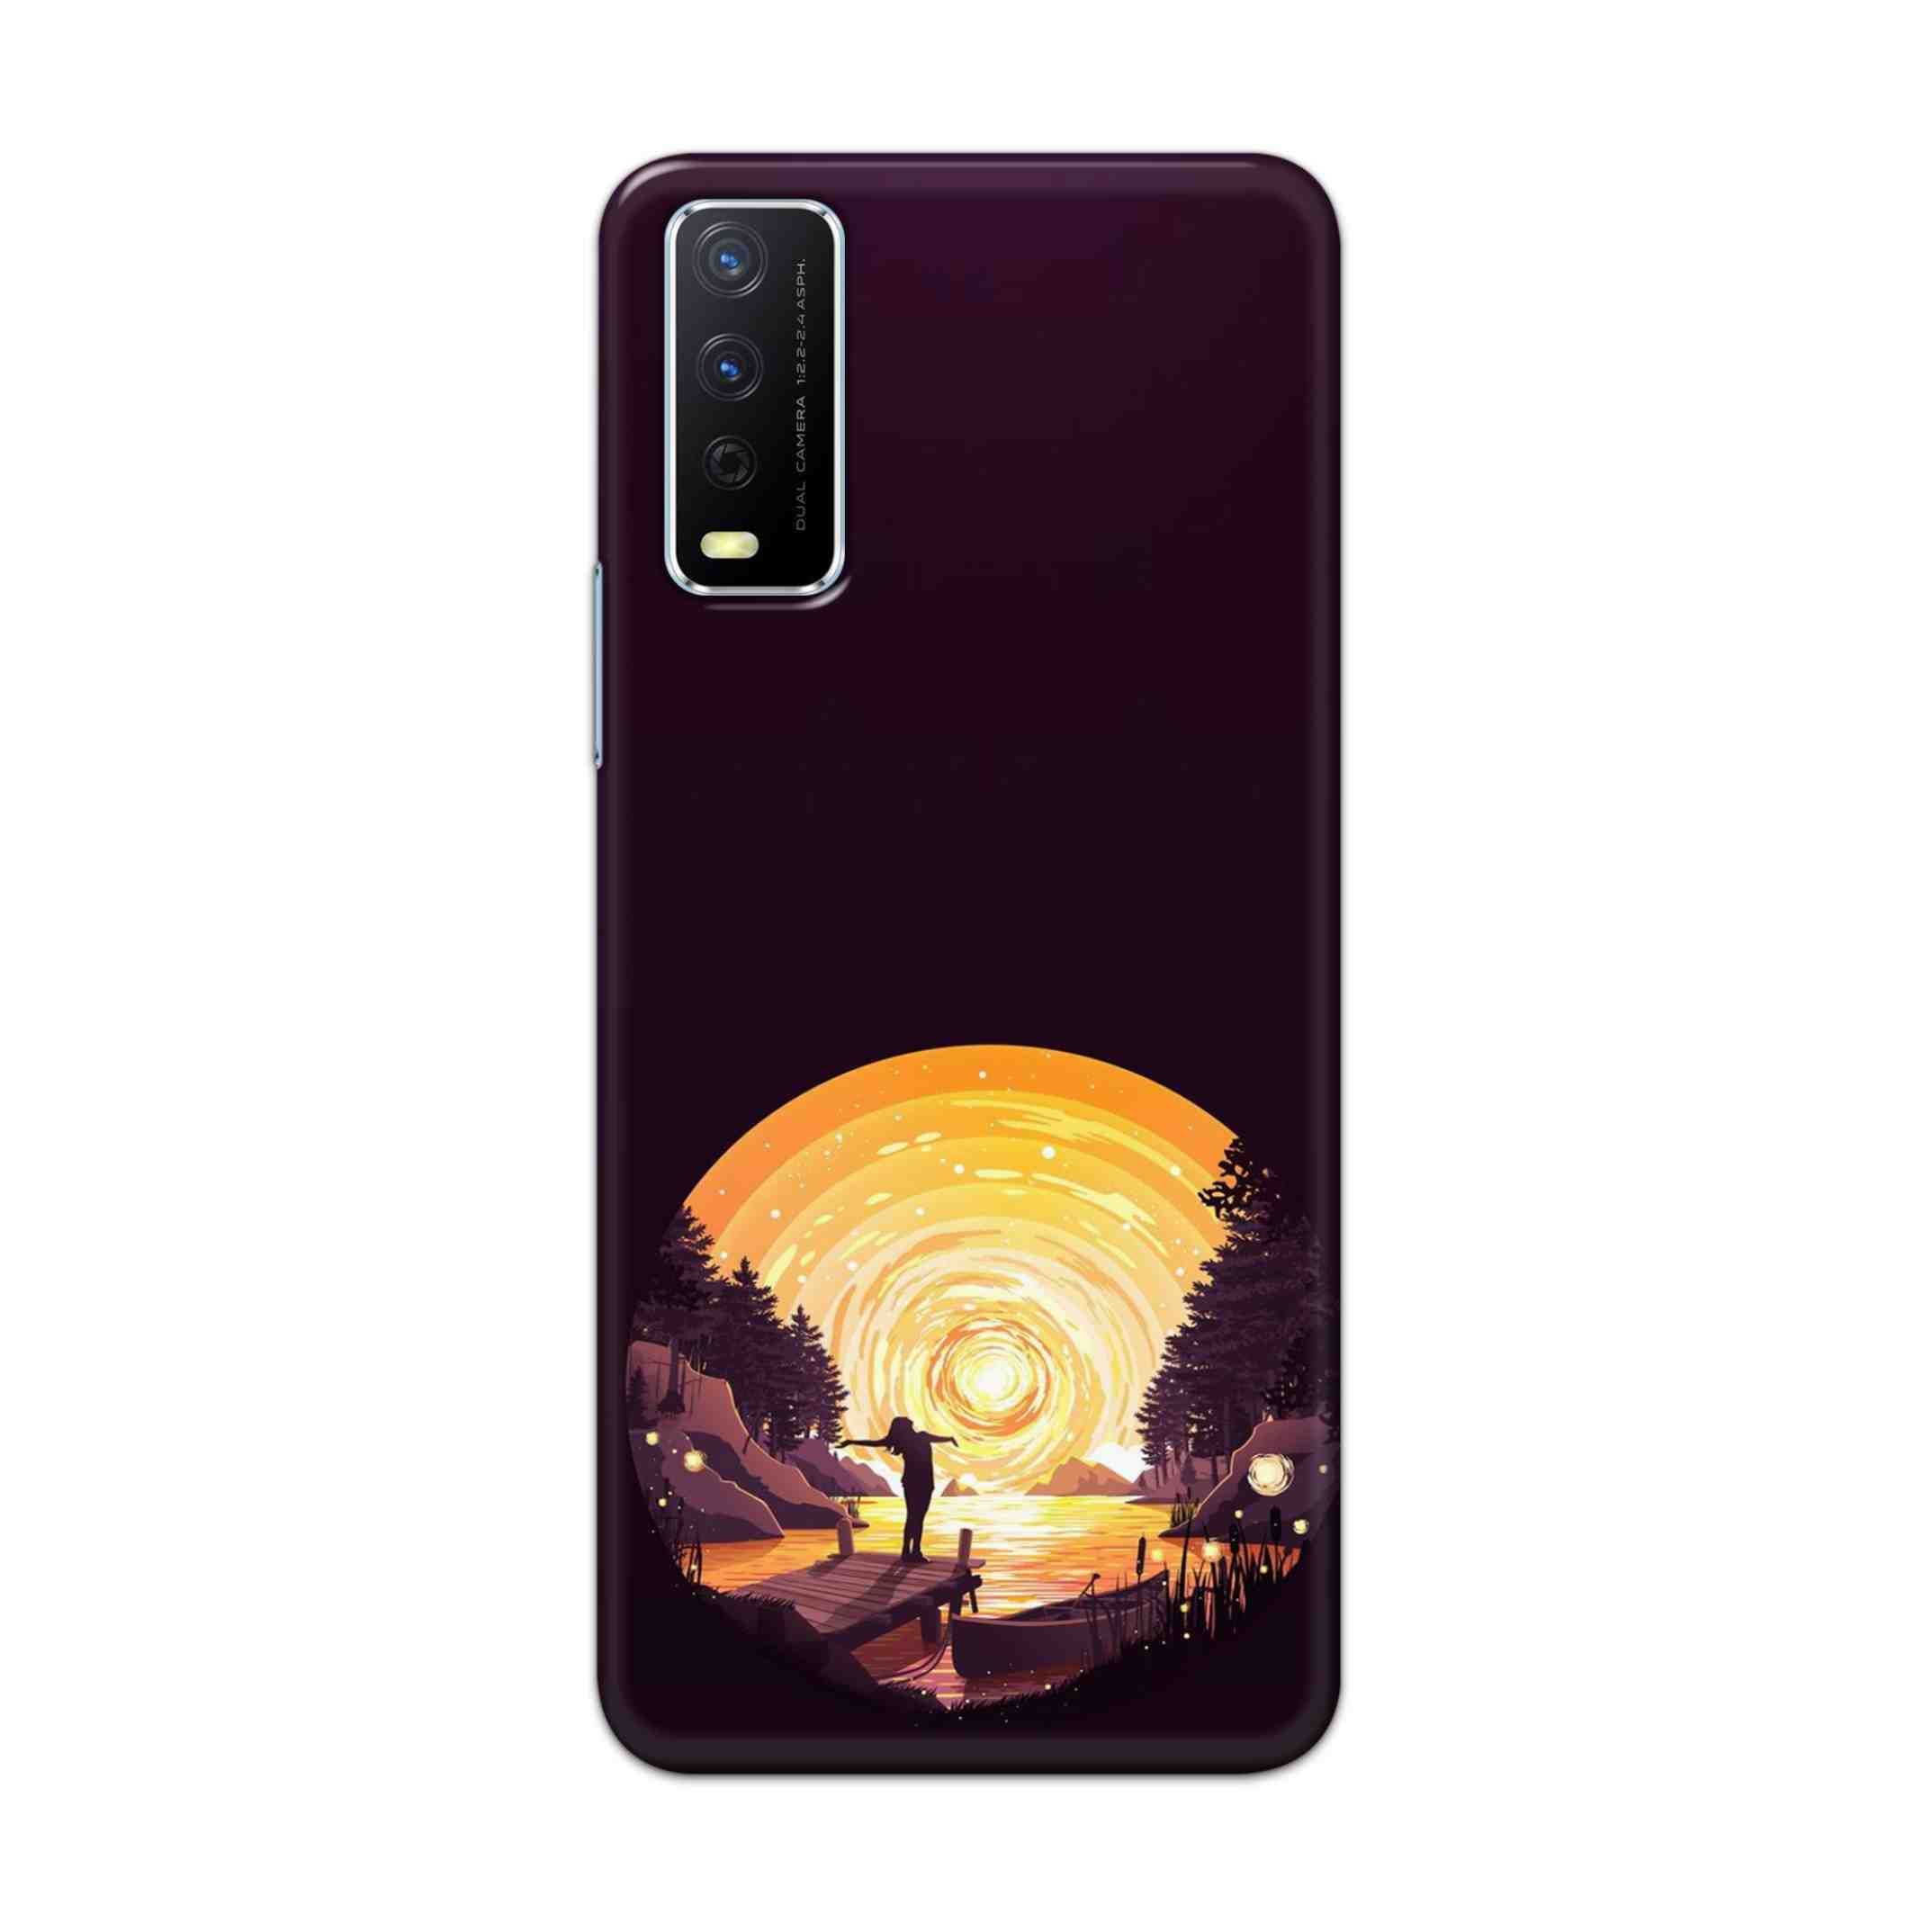 Buy Night Sunrise Hard Back Mobile Phone Case Cover For Vivo Y12s Online